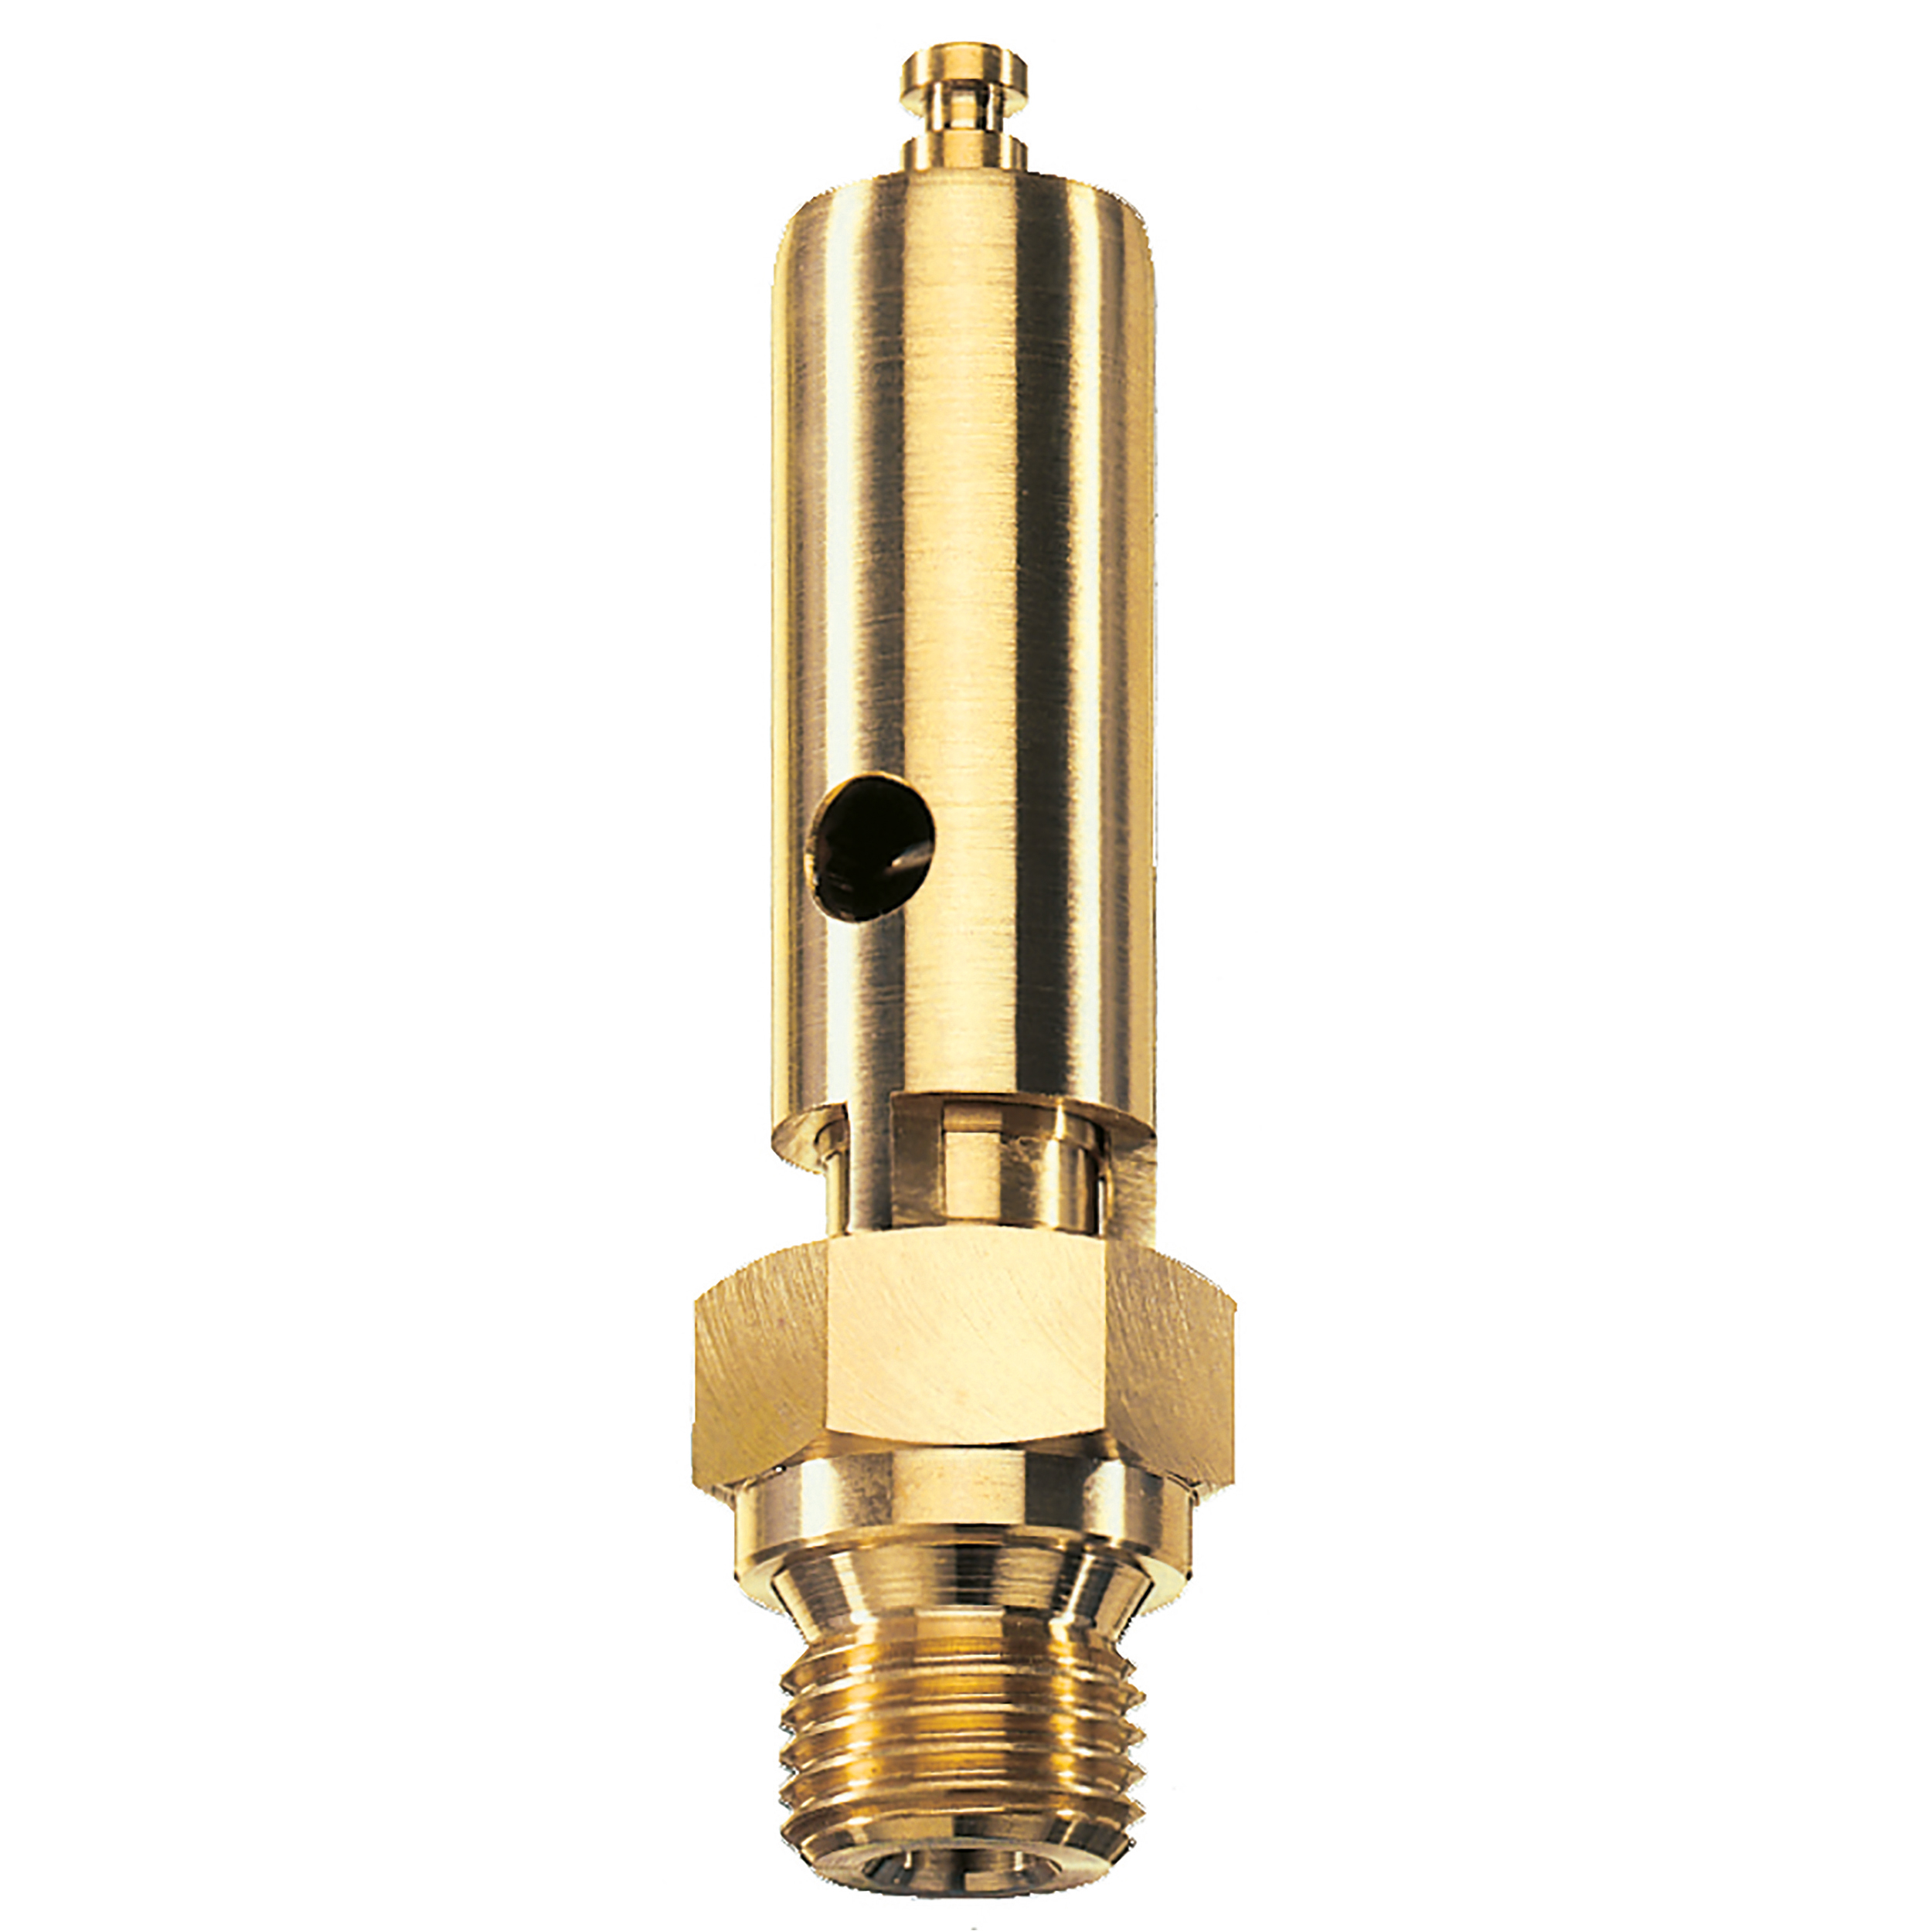 Component-tested safety valve DN 6, G¼, pressure: 4.5-7 bar